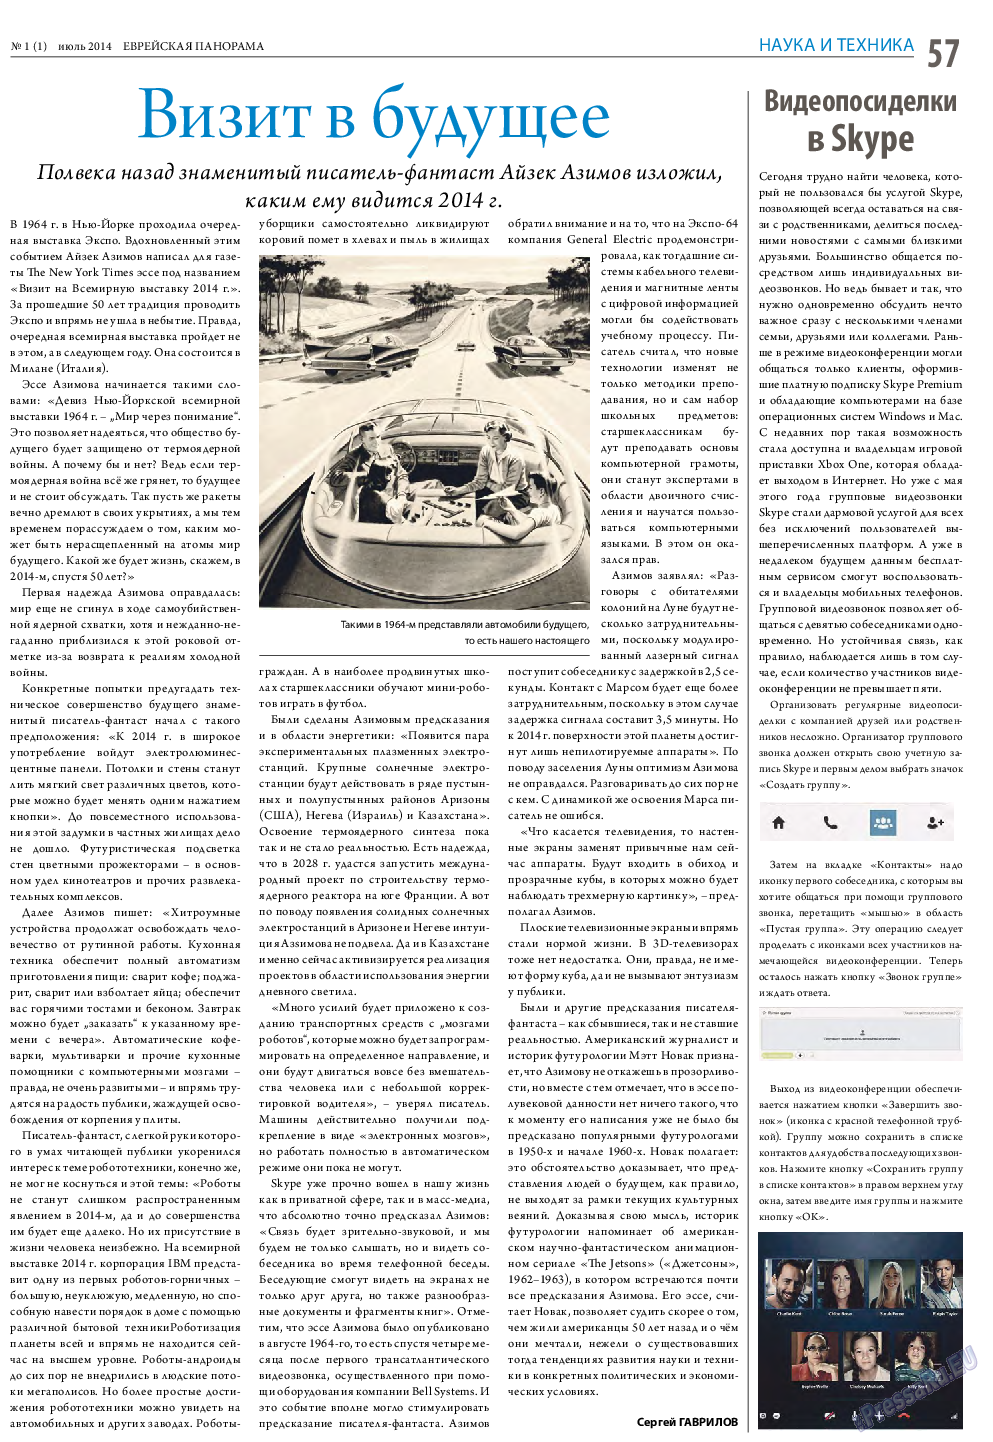 Еврейская панорама, газета. 2014 №1 стр.57